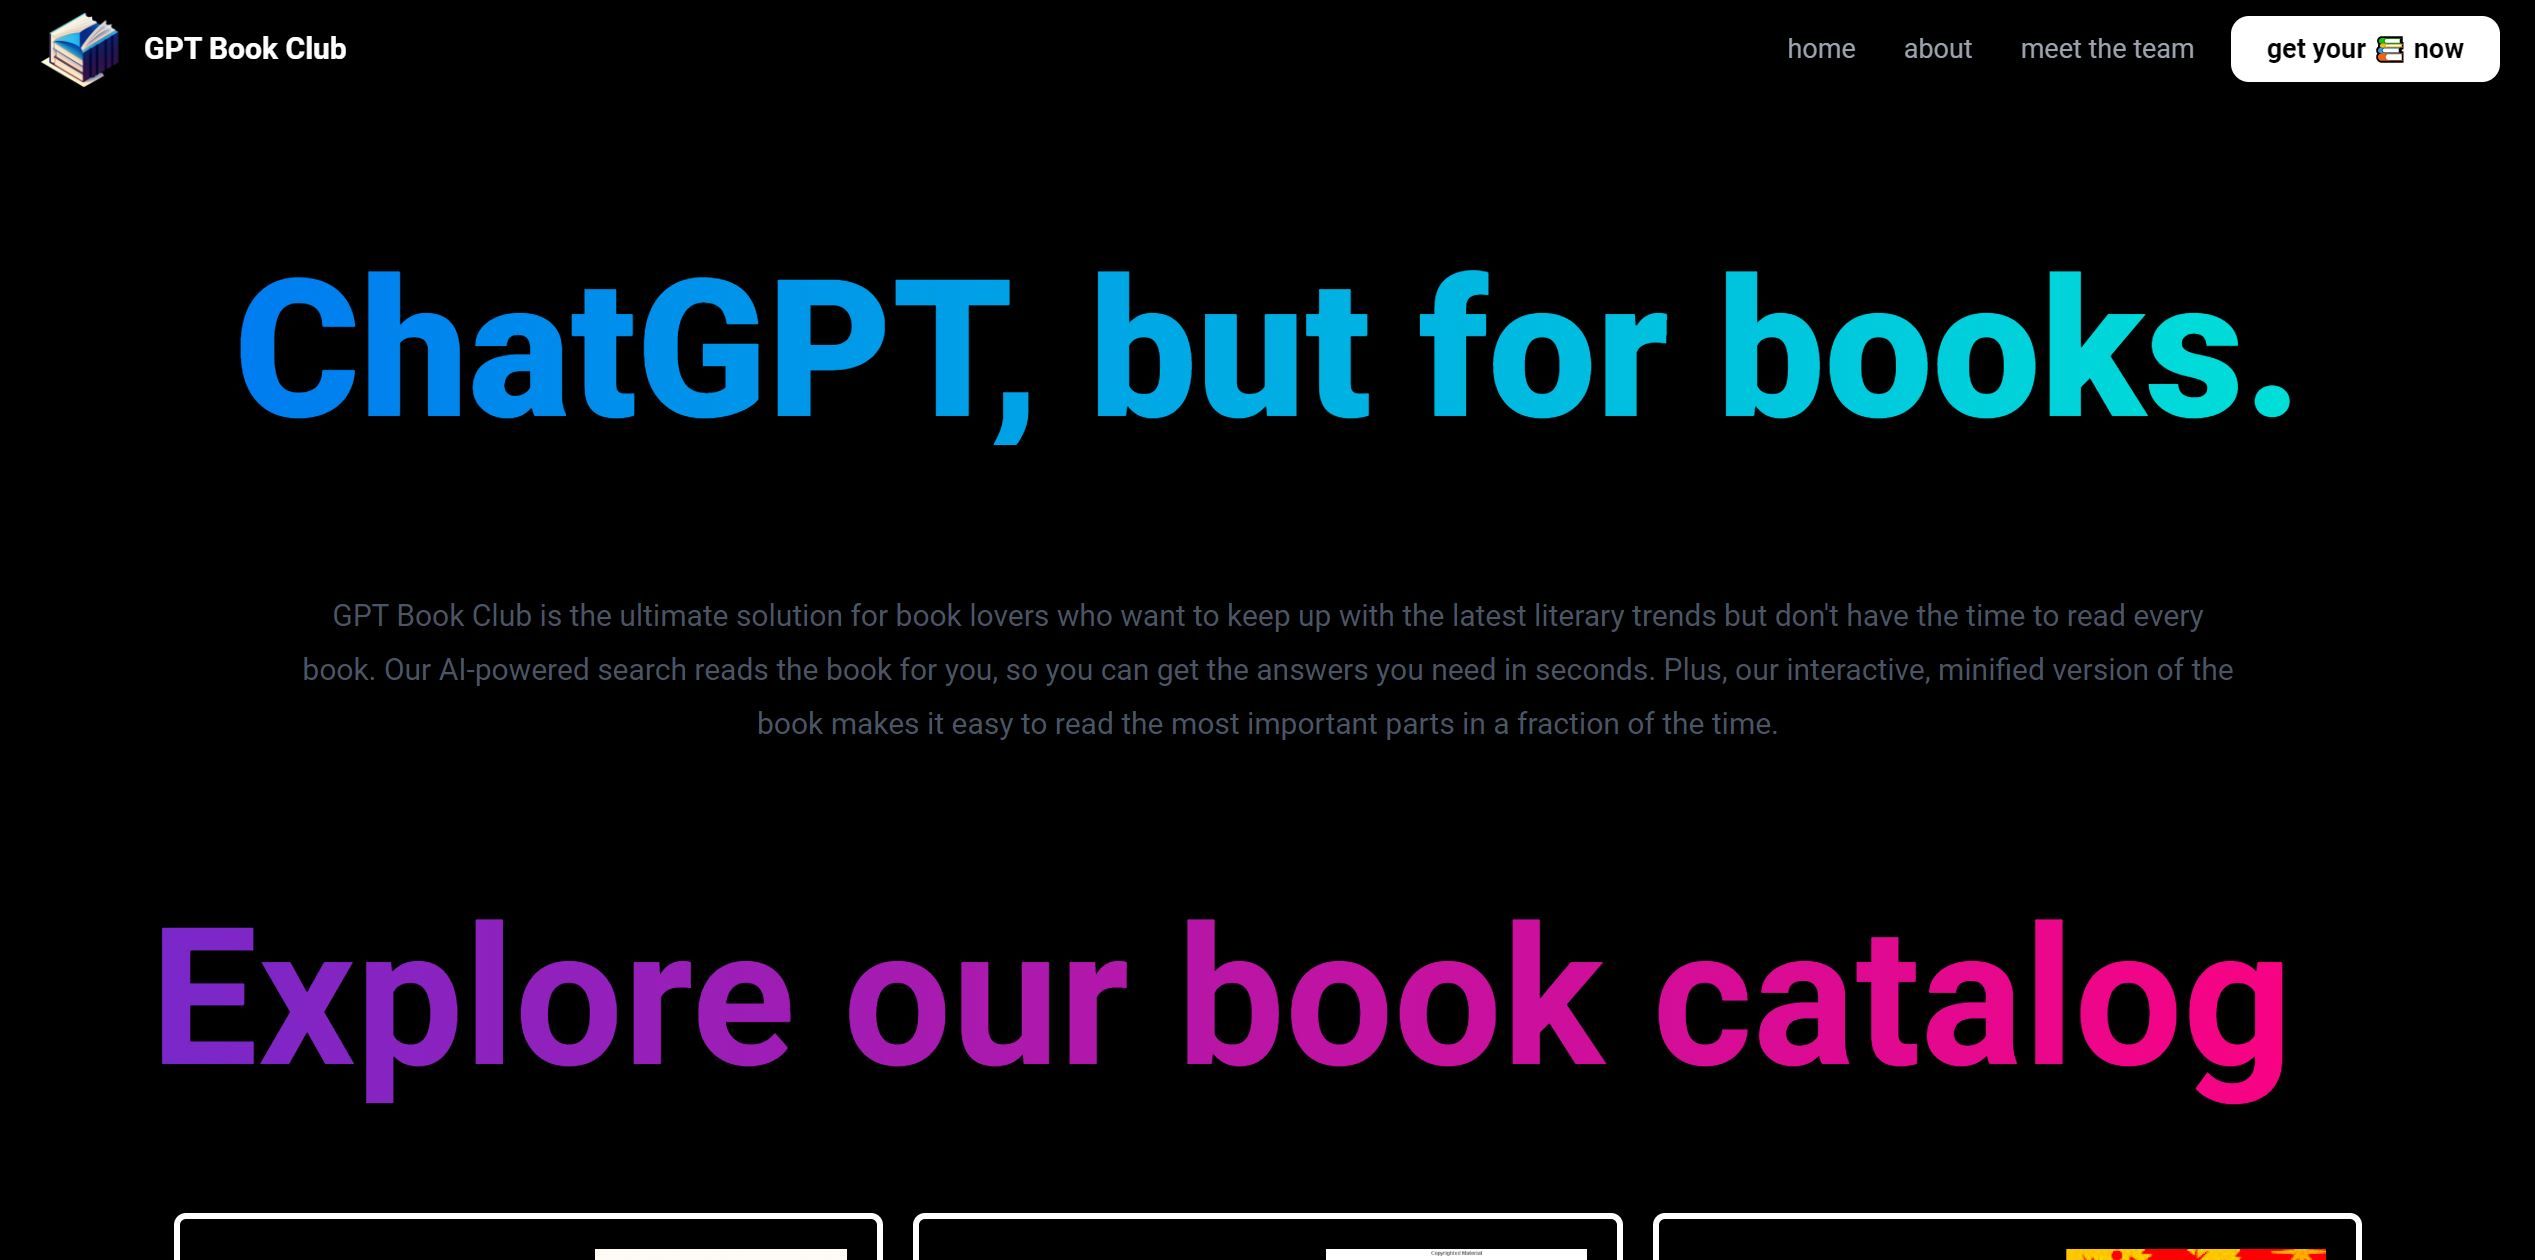 Post: GPT Book Club